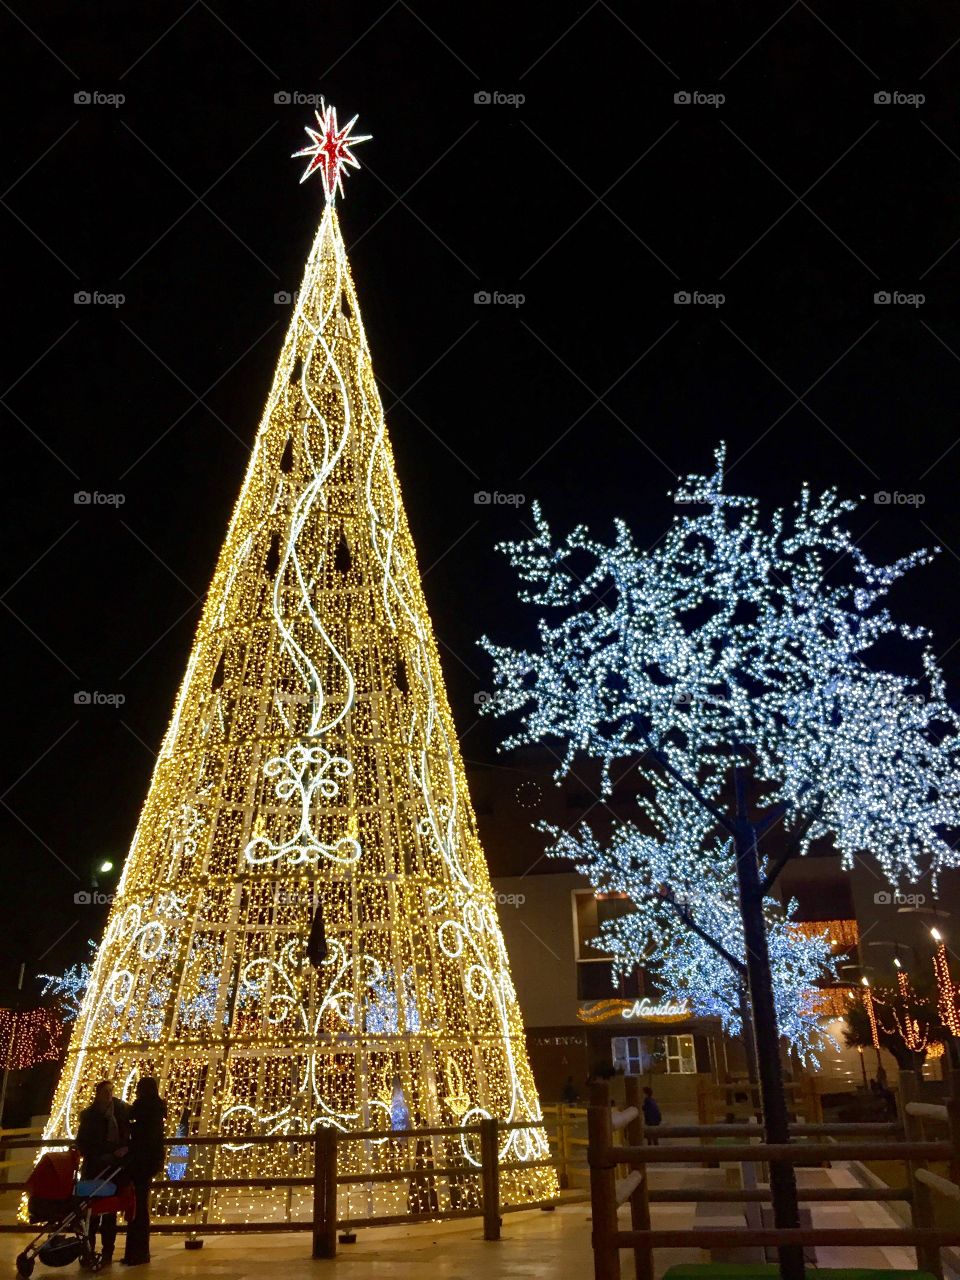 Illuminated Christmas decorations in Fuengirola, Spain.